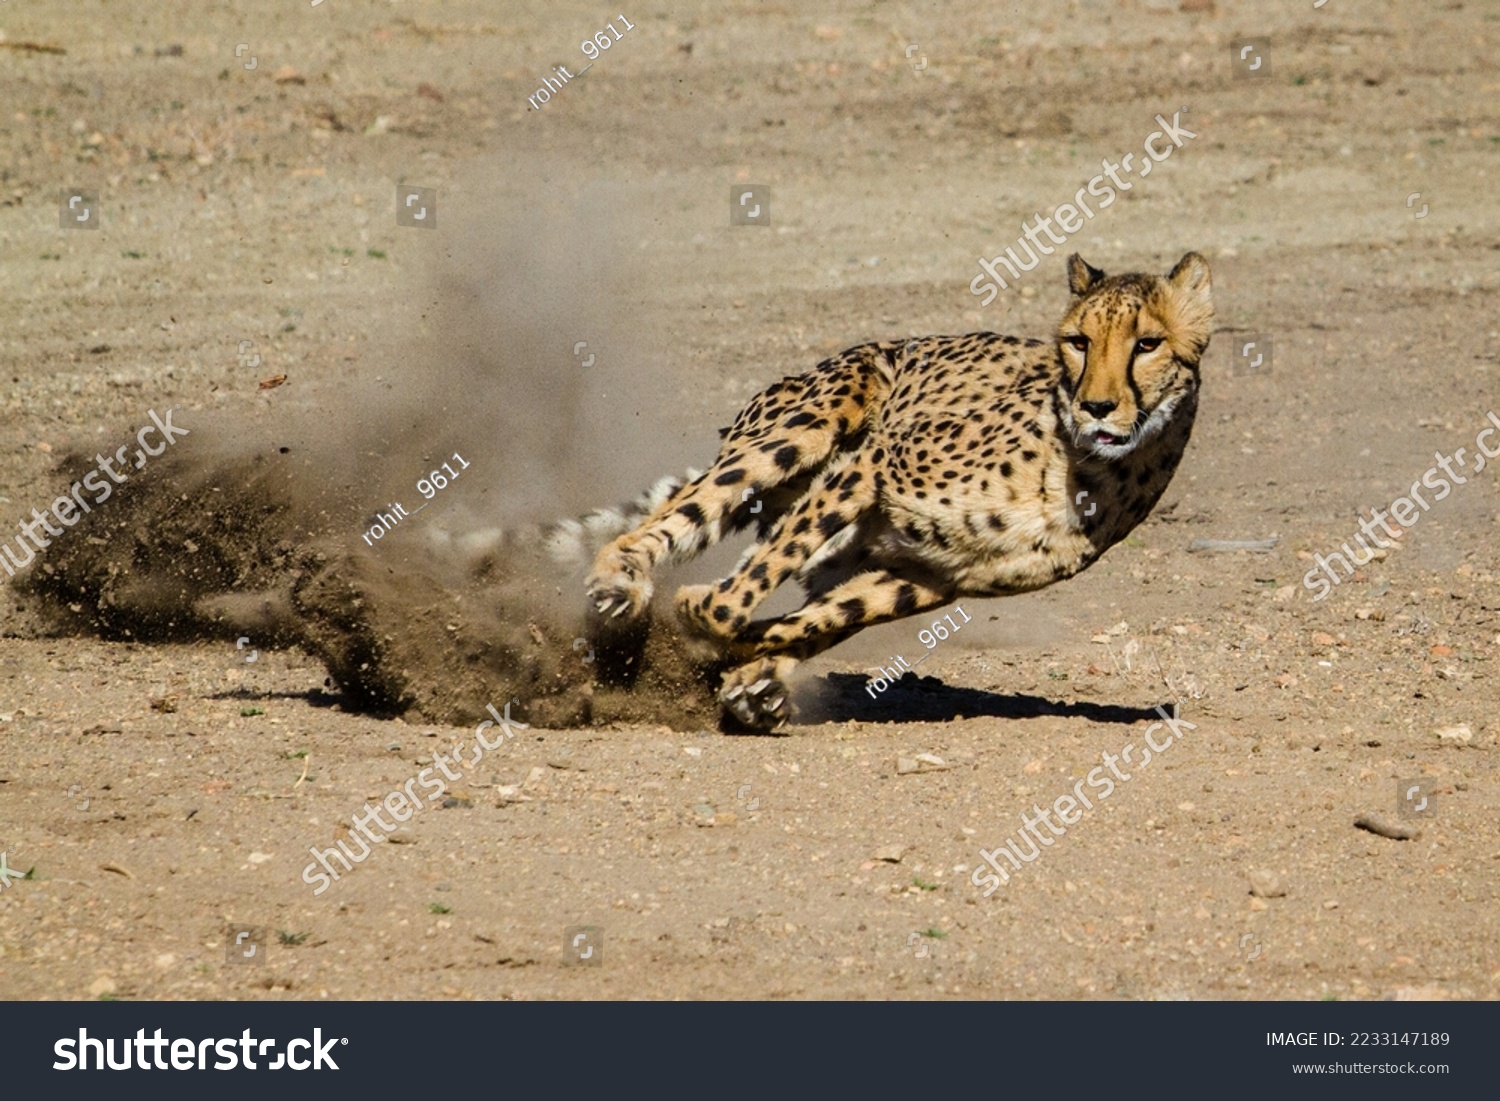 Fast And Nimble cheetah running in wild  #2233147189